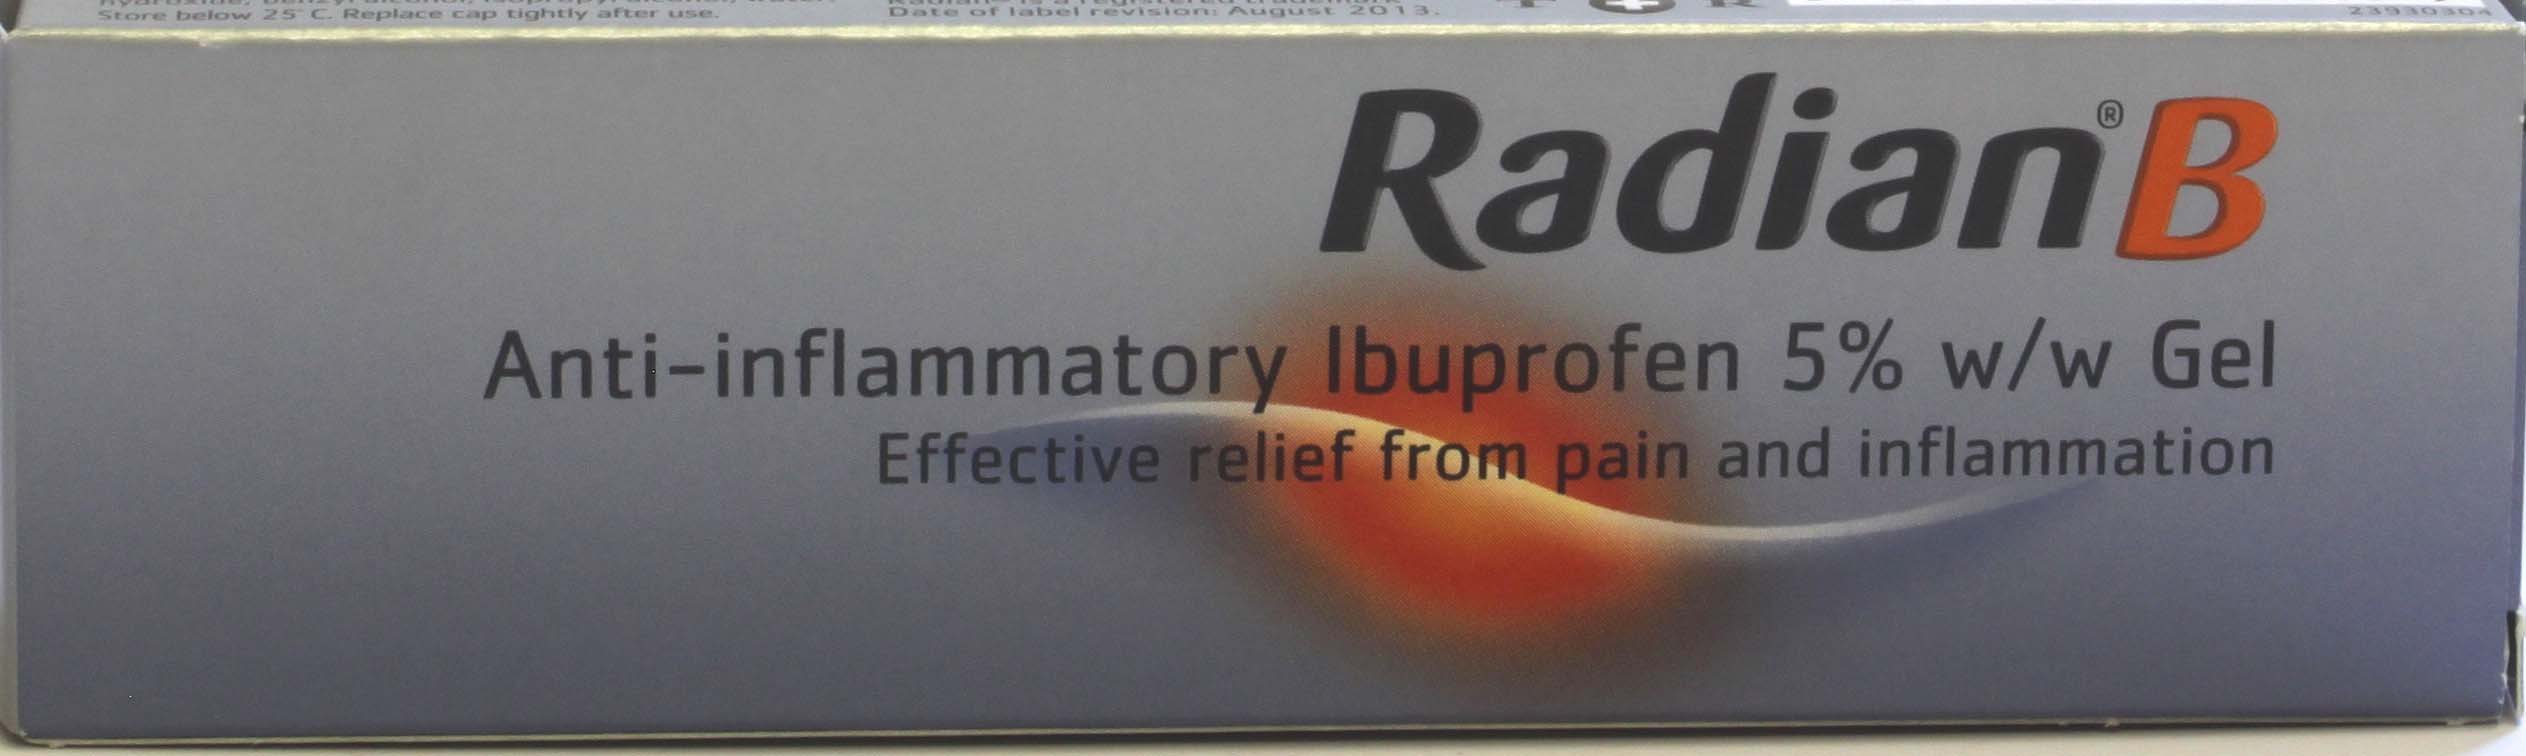 Radian B Anti-inflammatory Ibuprofen 5% w/w Gel 30g